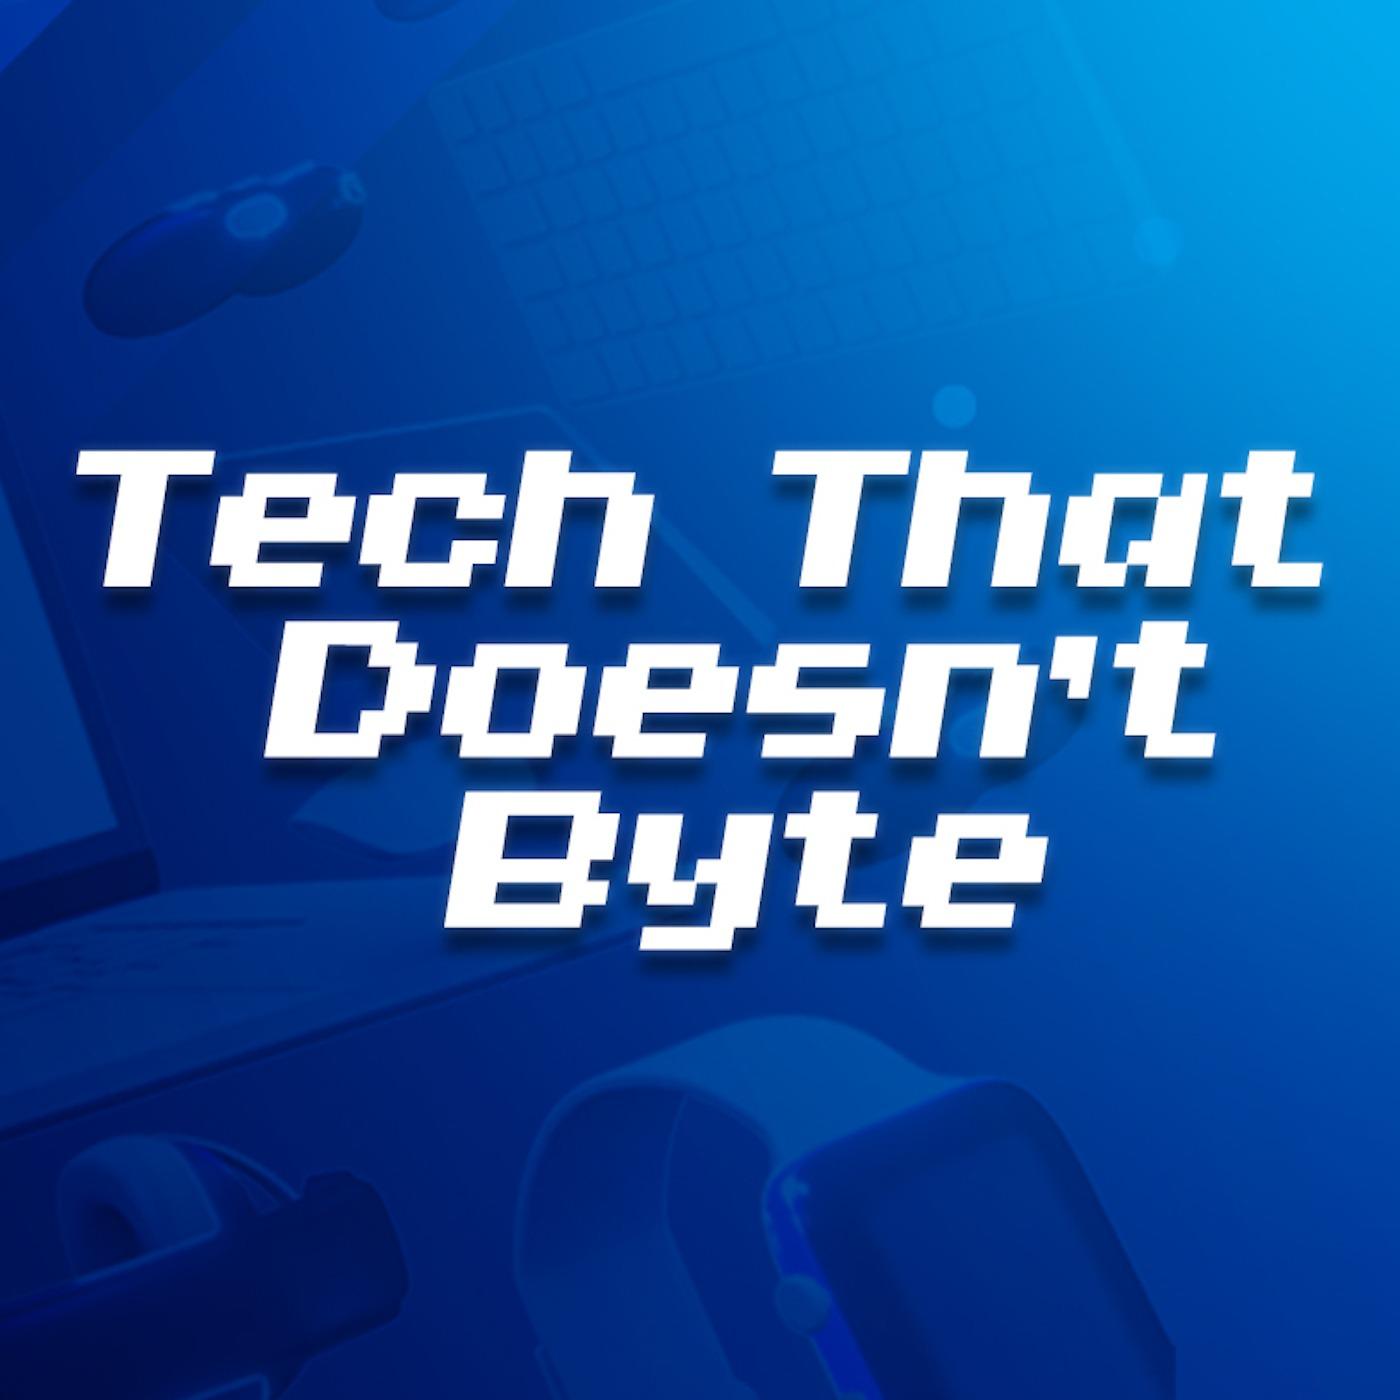 Tech That Doesn't Byte Cast